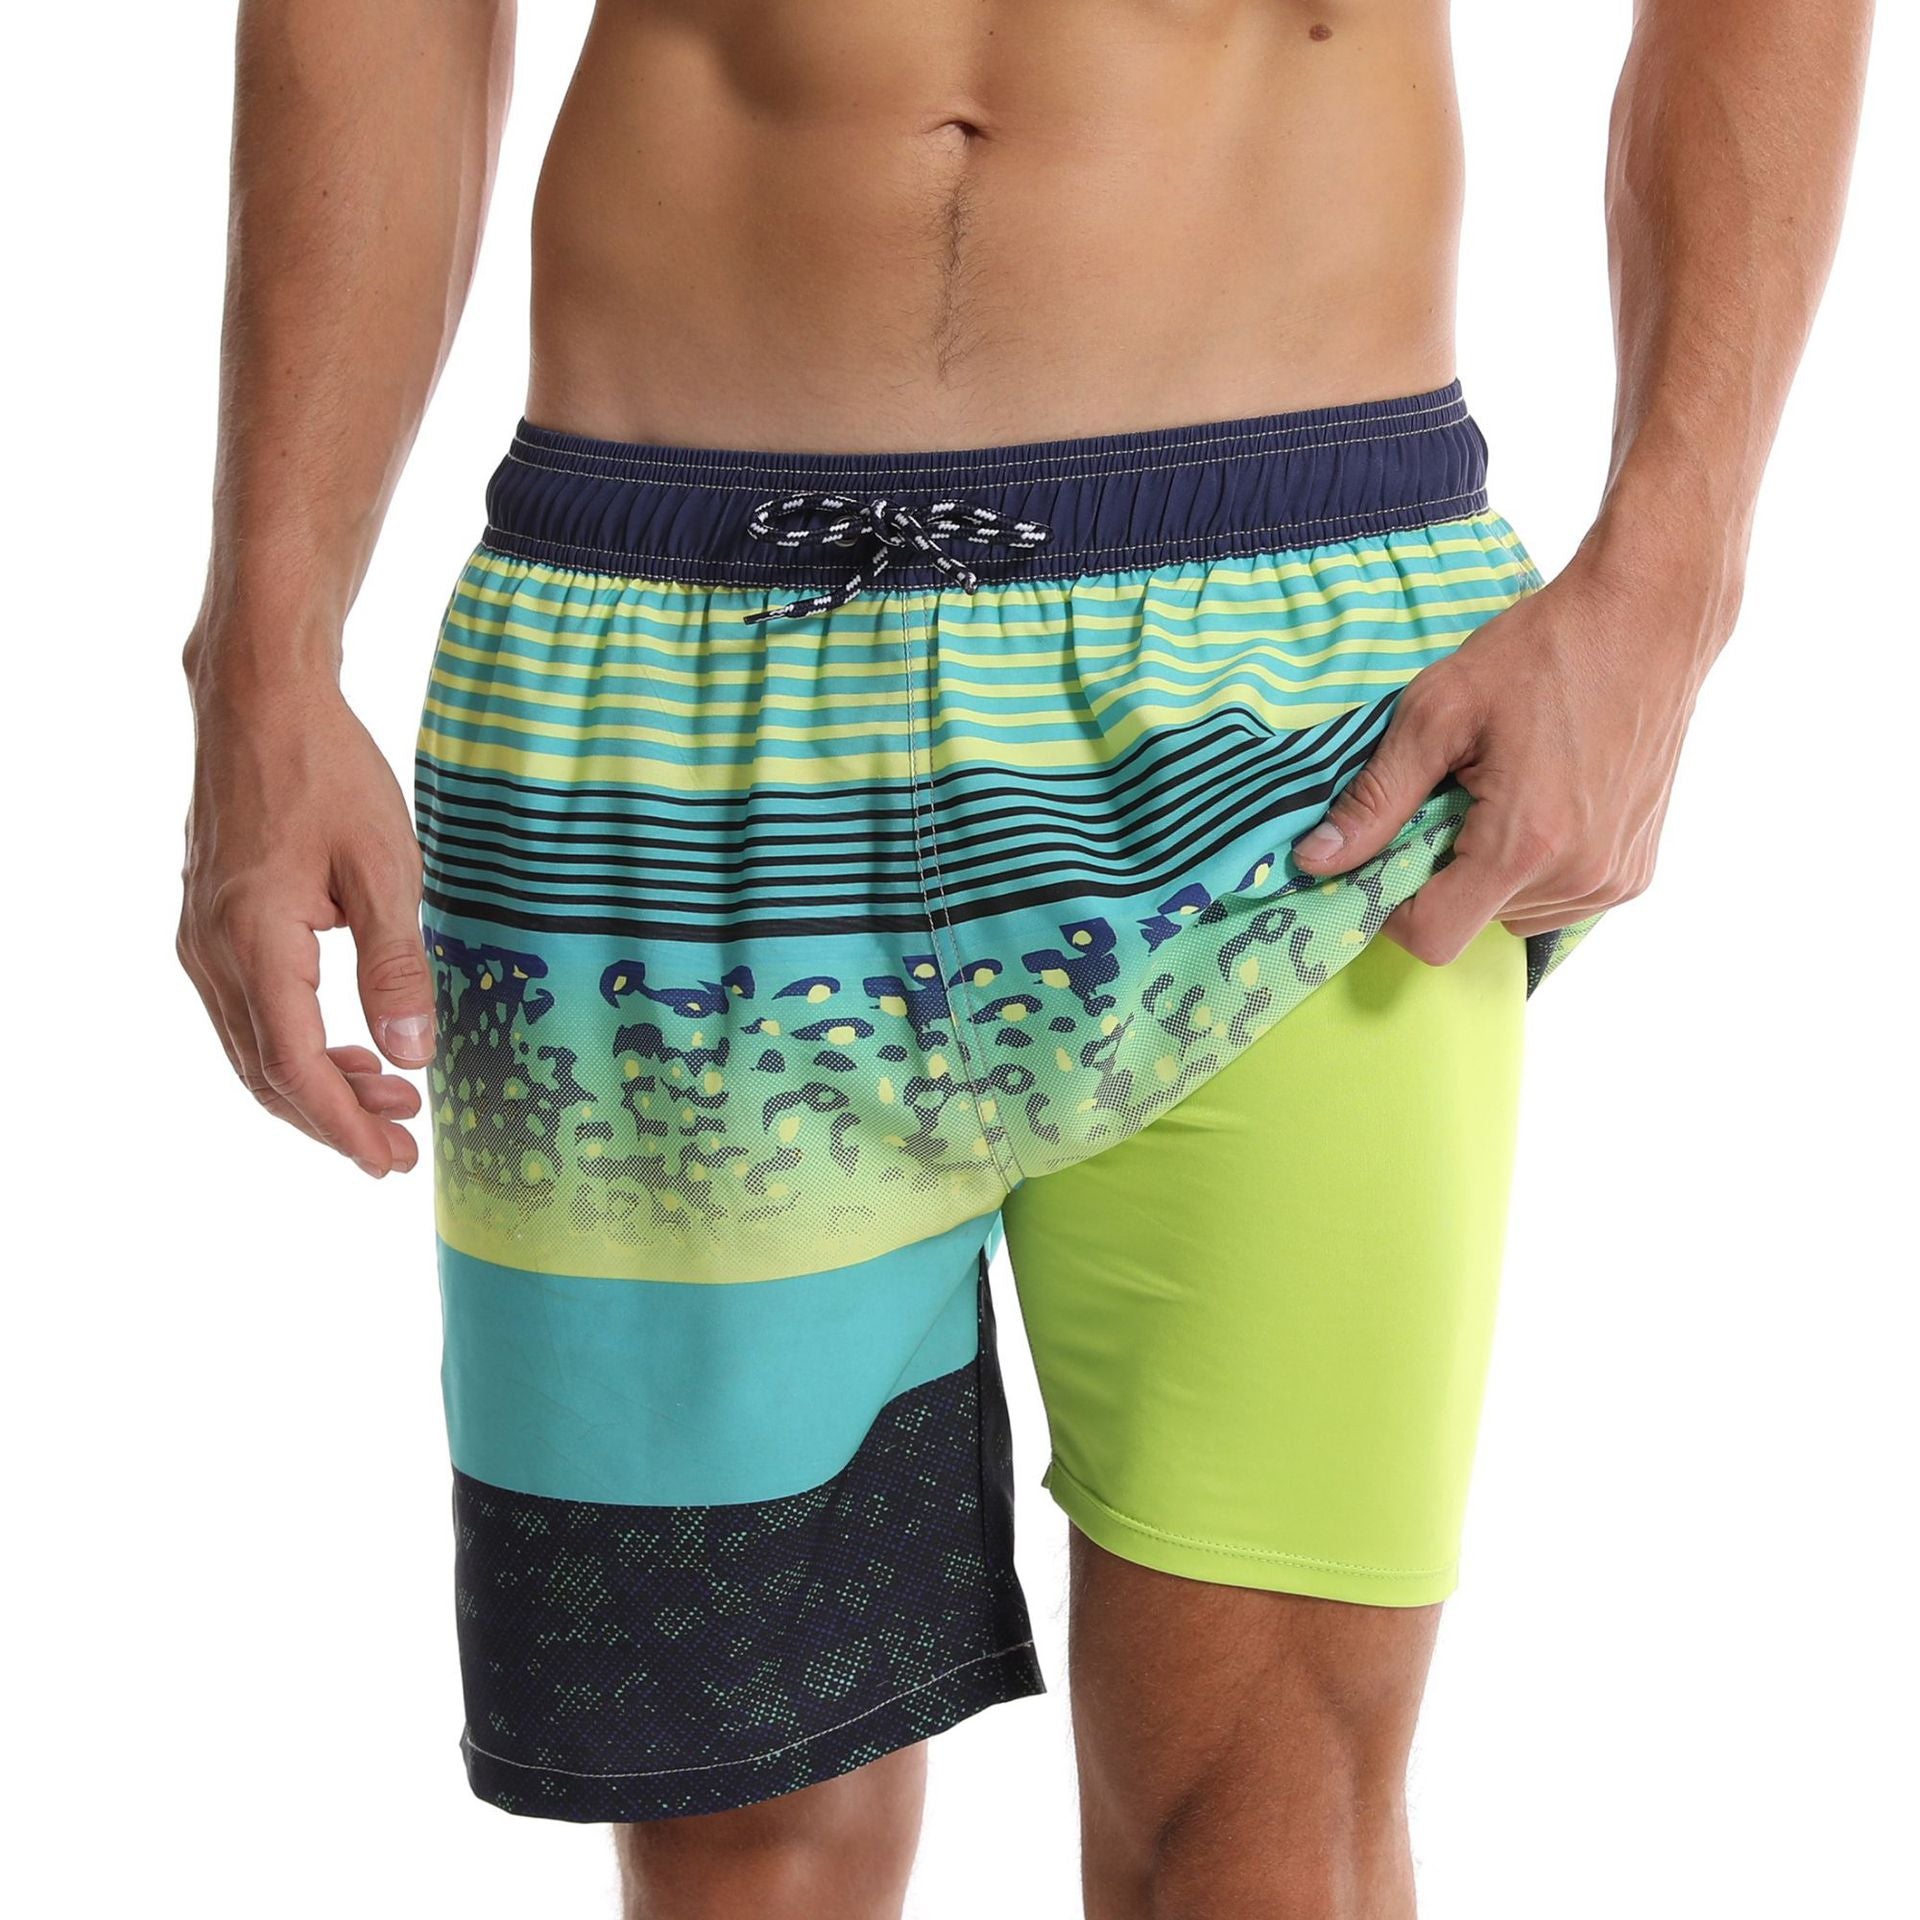 Men's Swim Trunks with Compression Liner Quick Dry 7" Inseam Swimsuit Swimwear - Stripe Drift Fashion